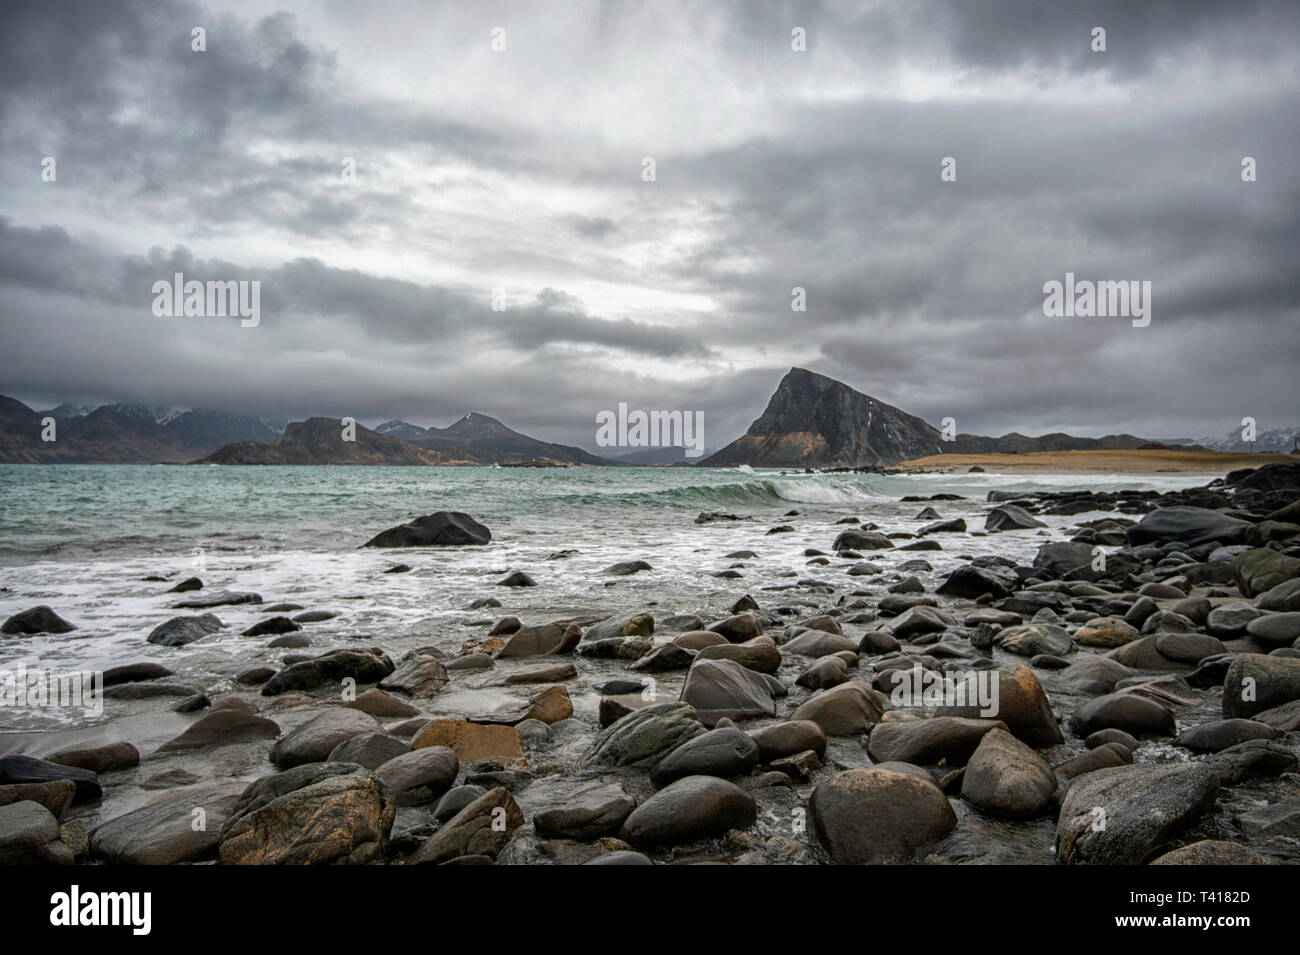 Nuvole temporalesche sulla spiaggia, Myrland, Flakstad, Lofoten, Nordland, Norvegia Foto Stock